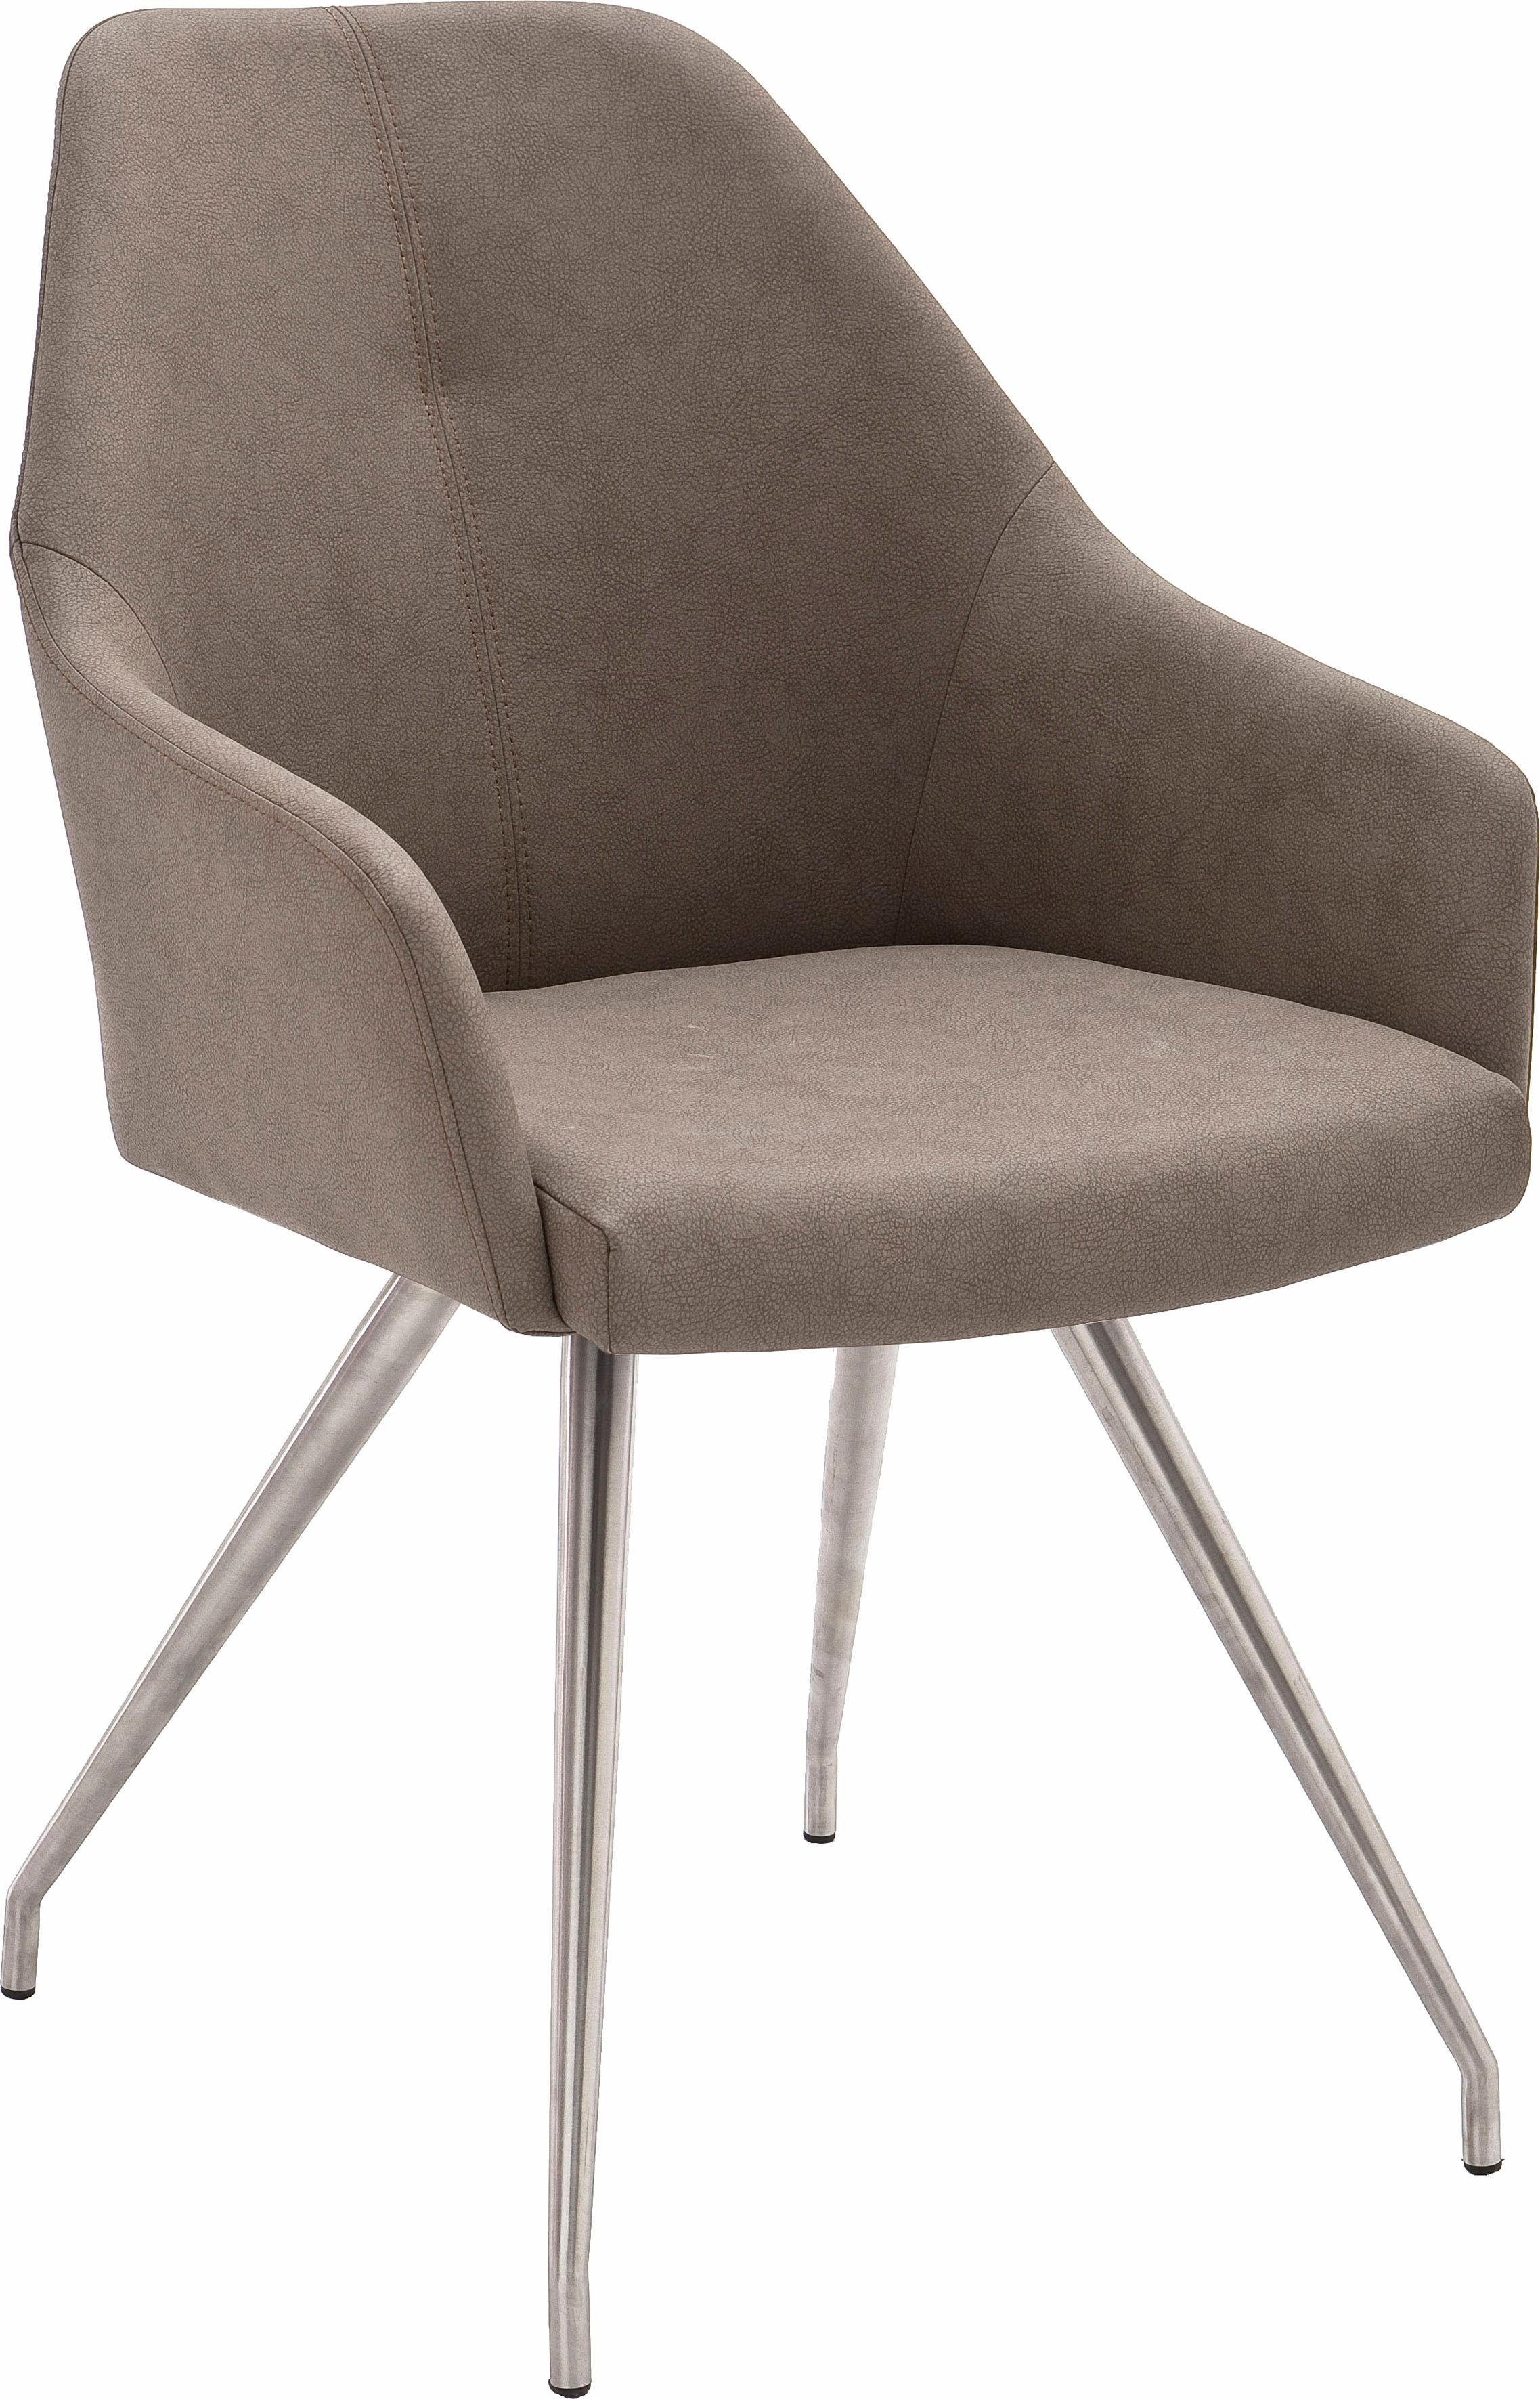 A-Oval Stuhl bis Taupe Madita 2 MCA St), 140 belastbar Kg 4-Fußstuhl furniture (Set, Taupe |